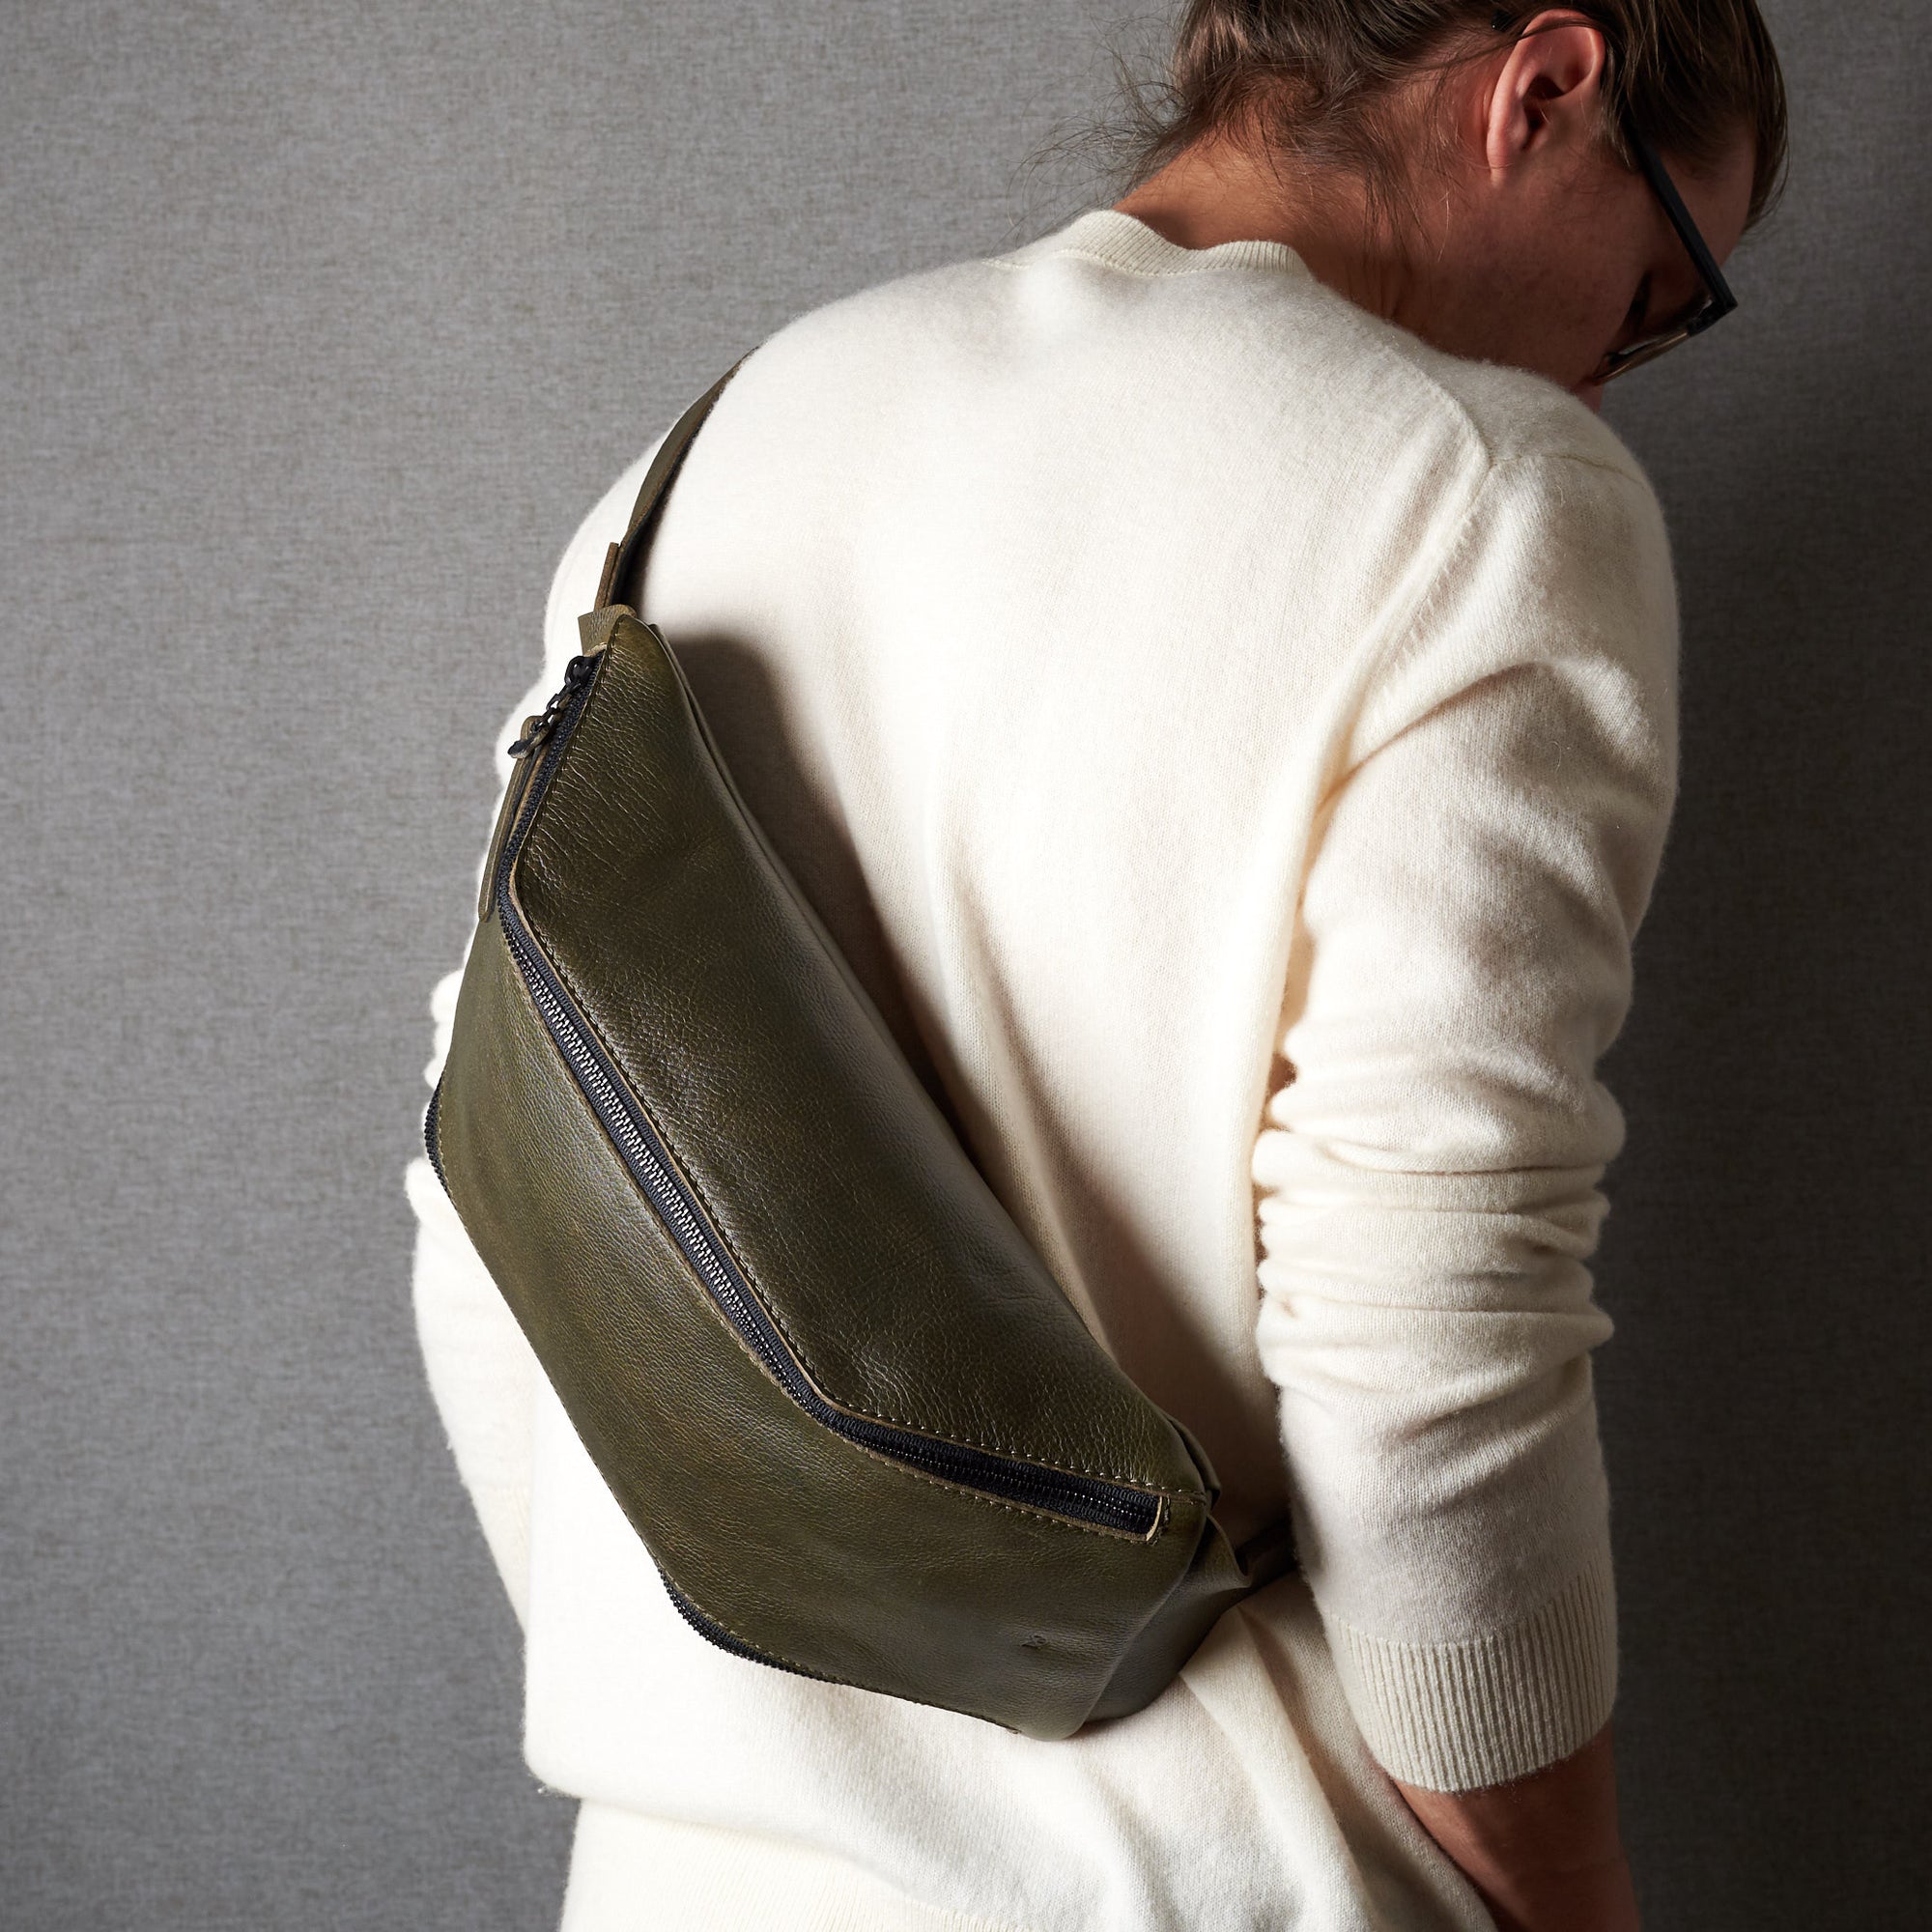 Styling side. Fenek green sling bag for men by Capra Leather. Festival messenger bag with engraving.